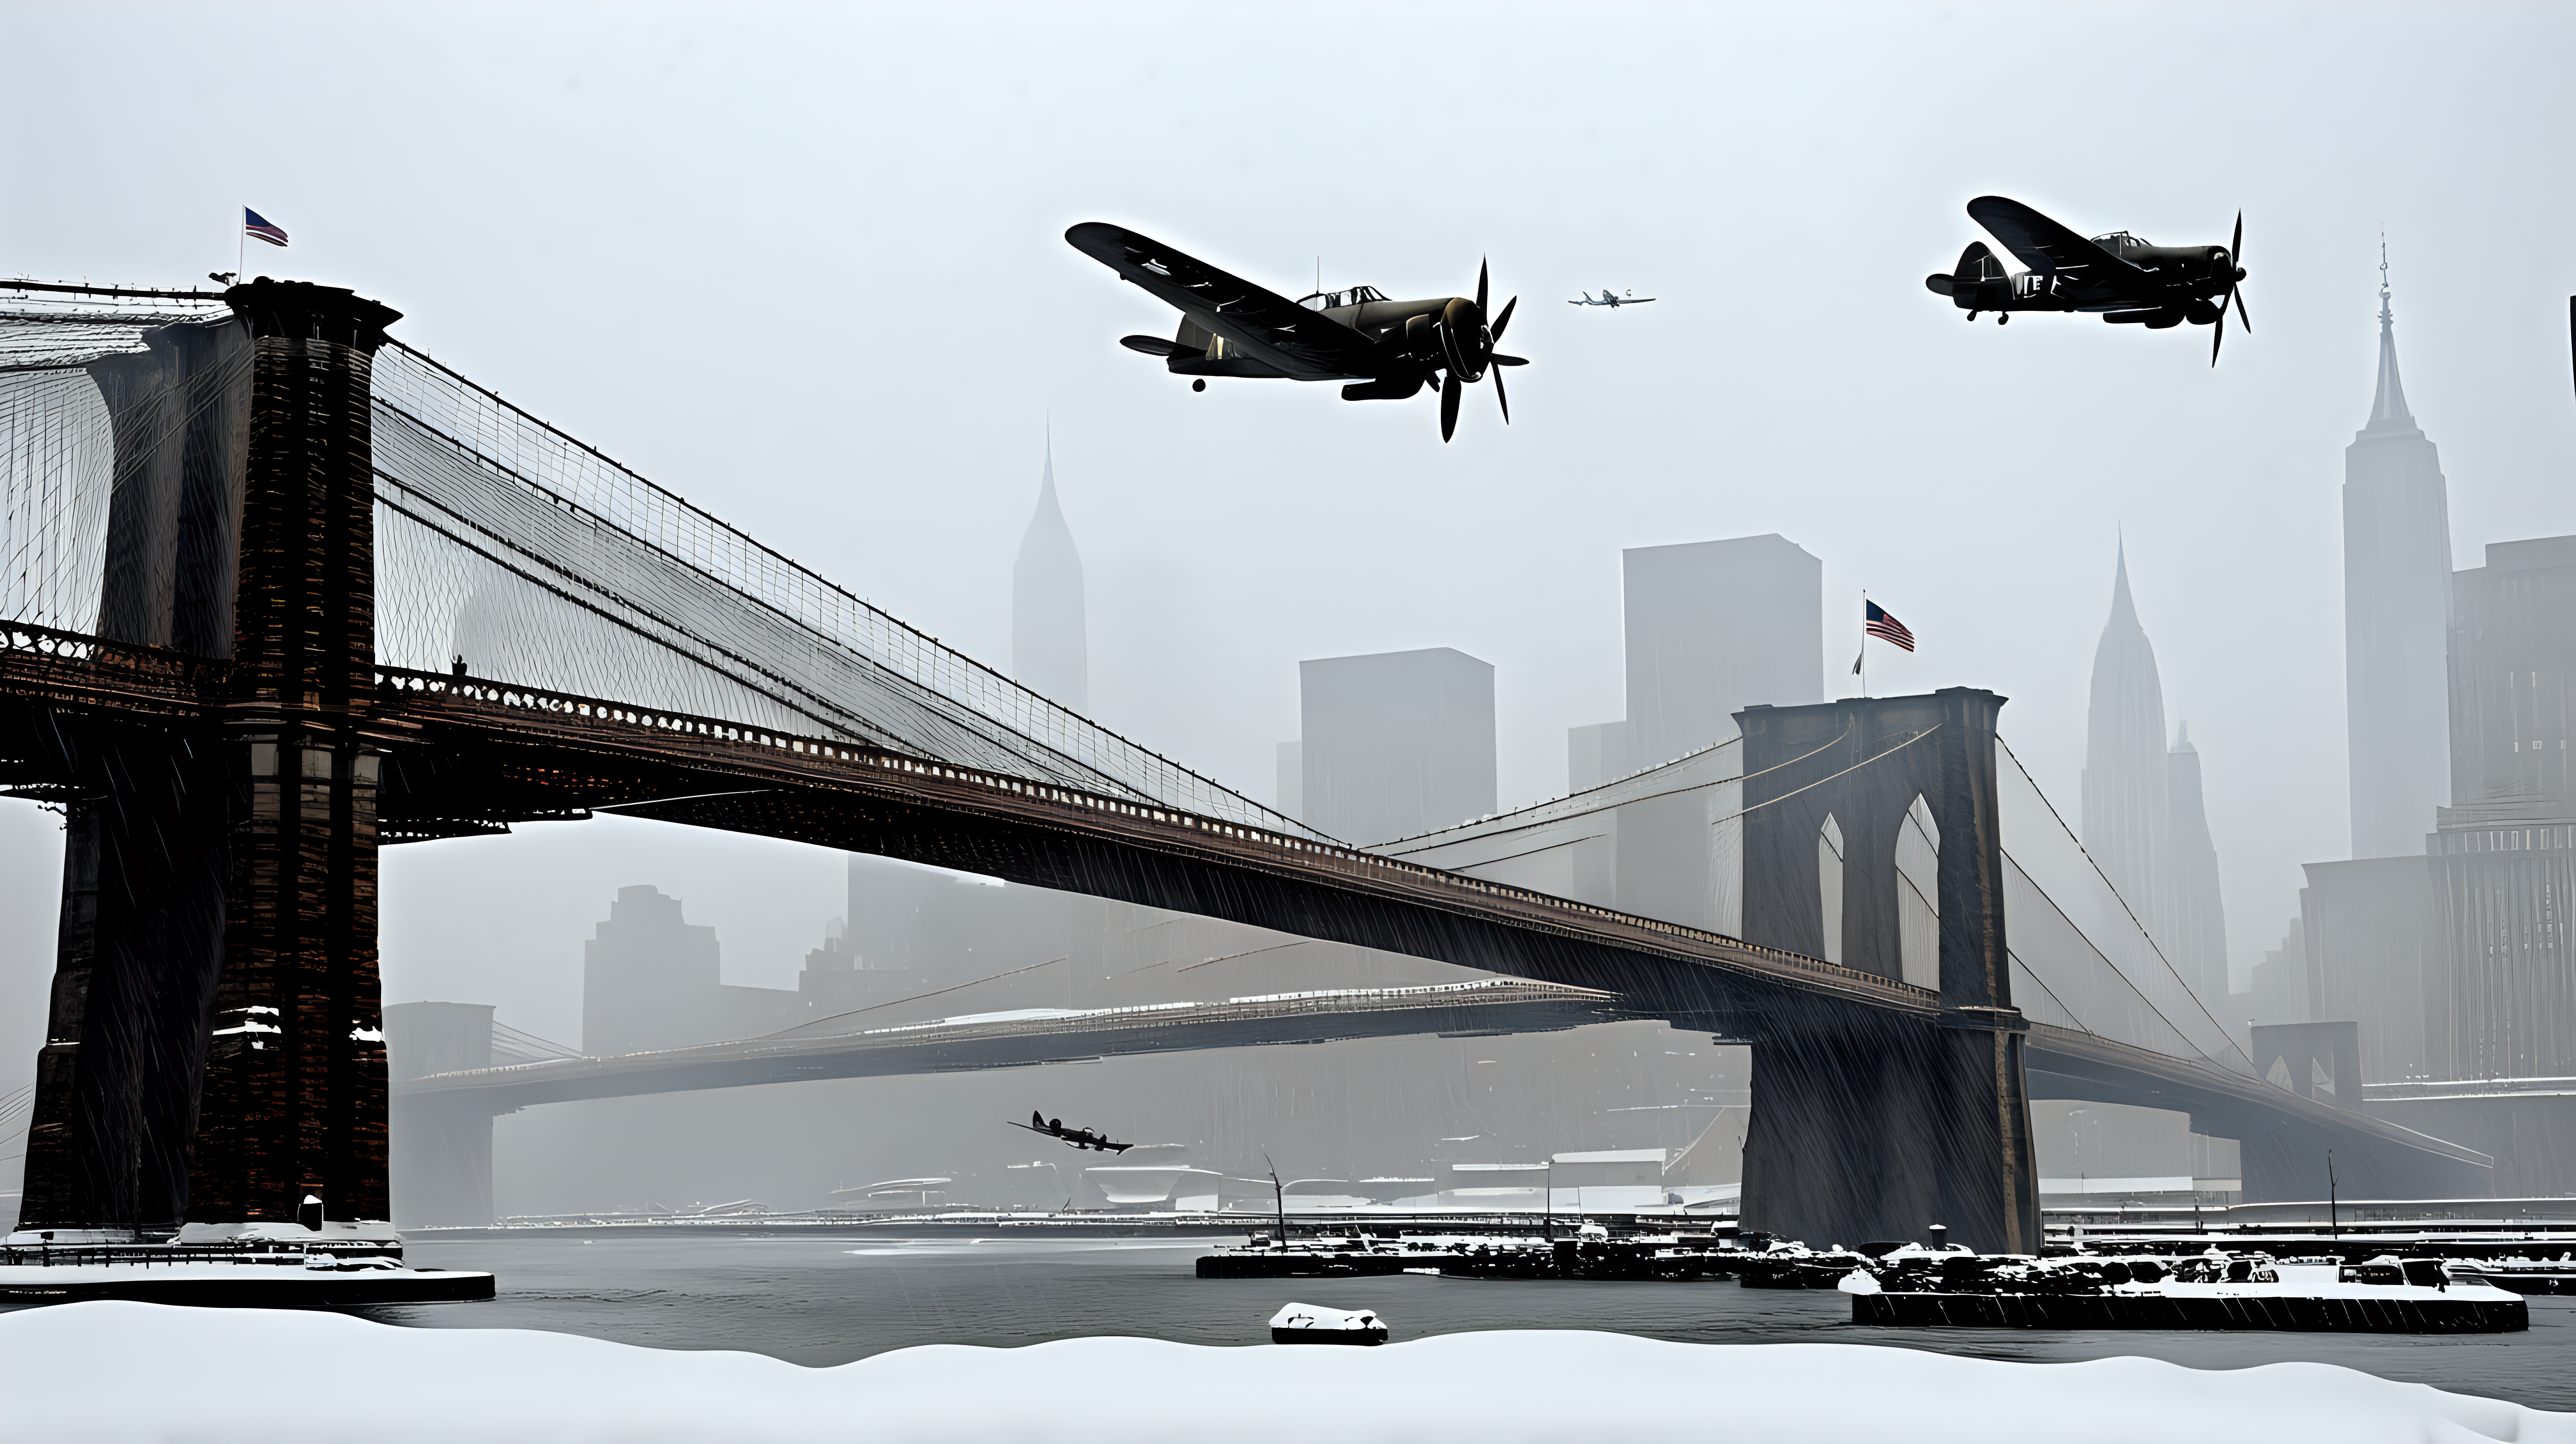 WW2 planes flying over Brooklyn bridge shrouded in